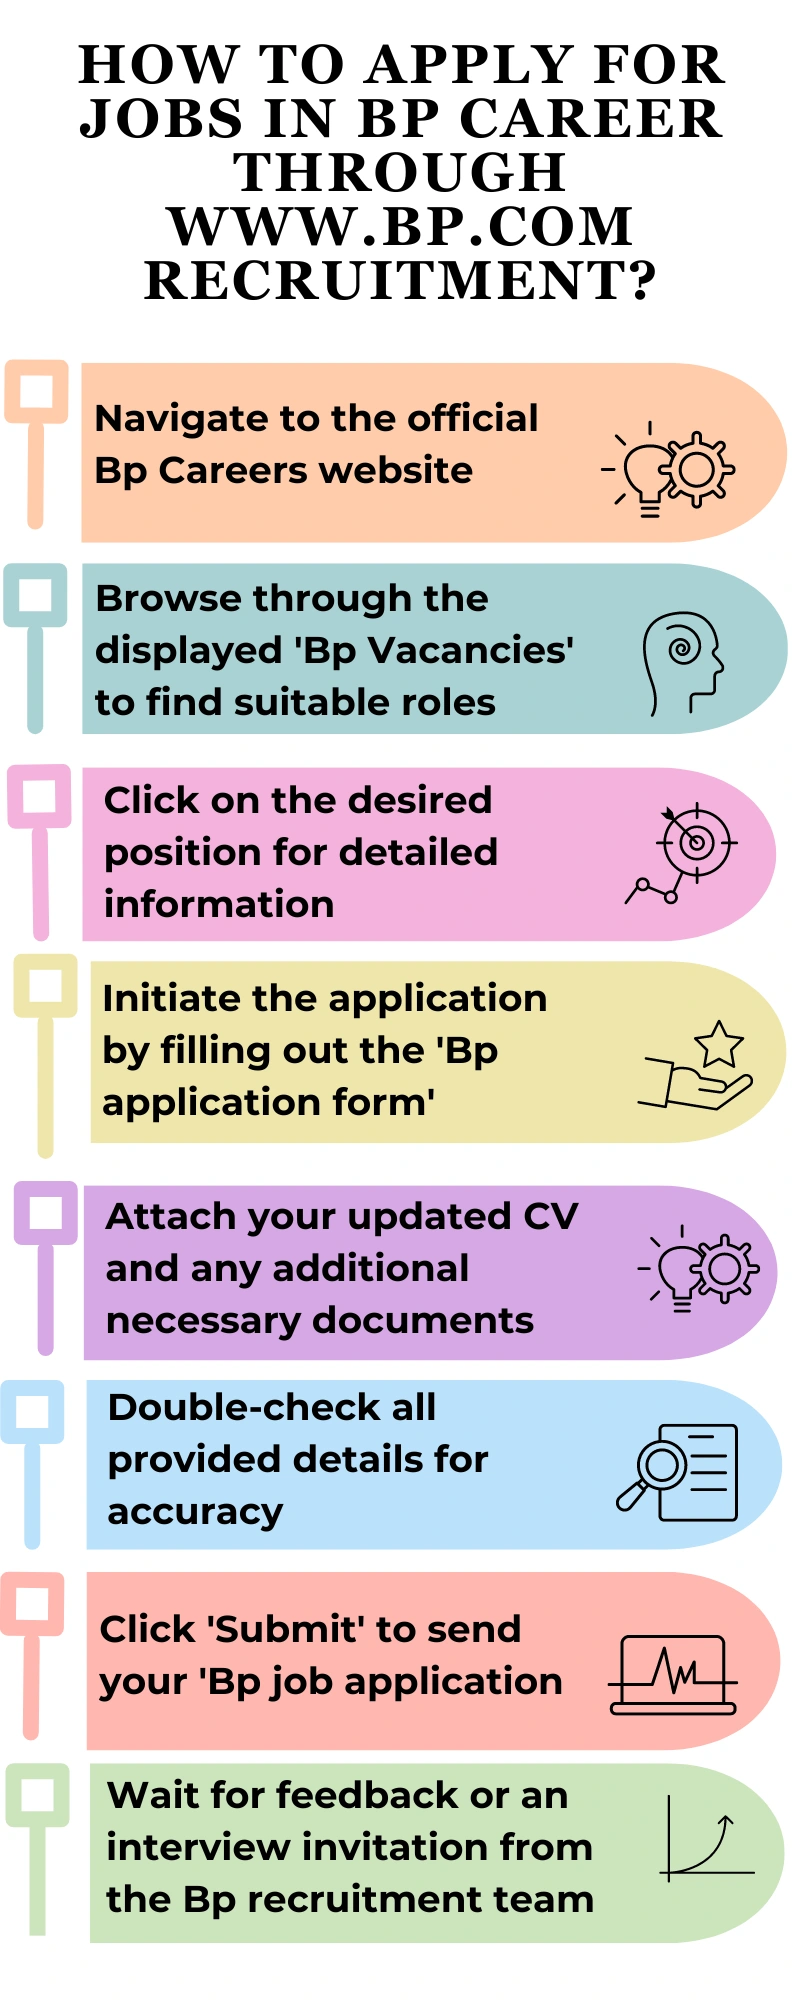 How to Apply for Jobs in Bp Career through www.bp.com recruitment?